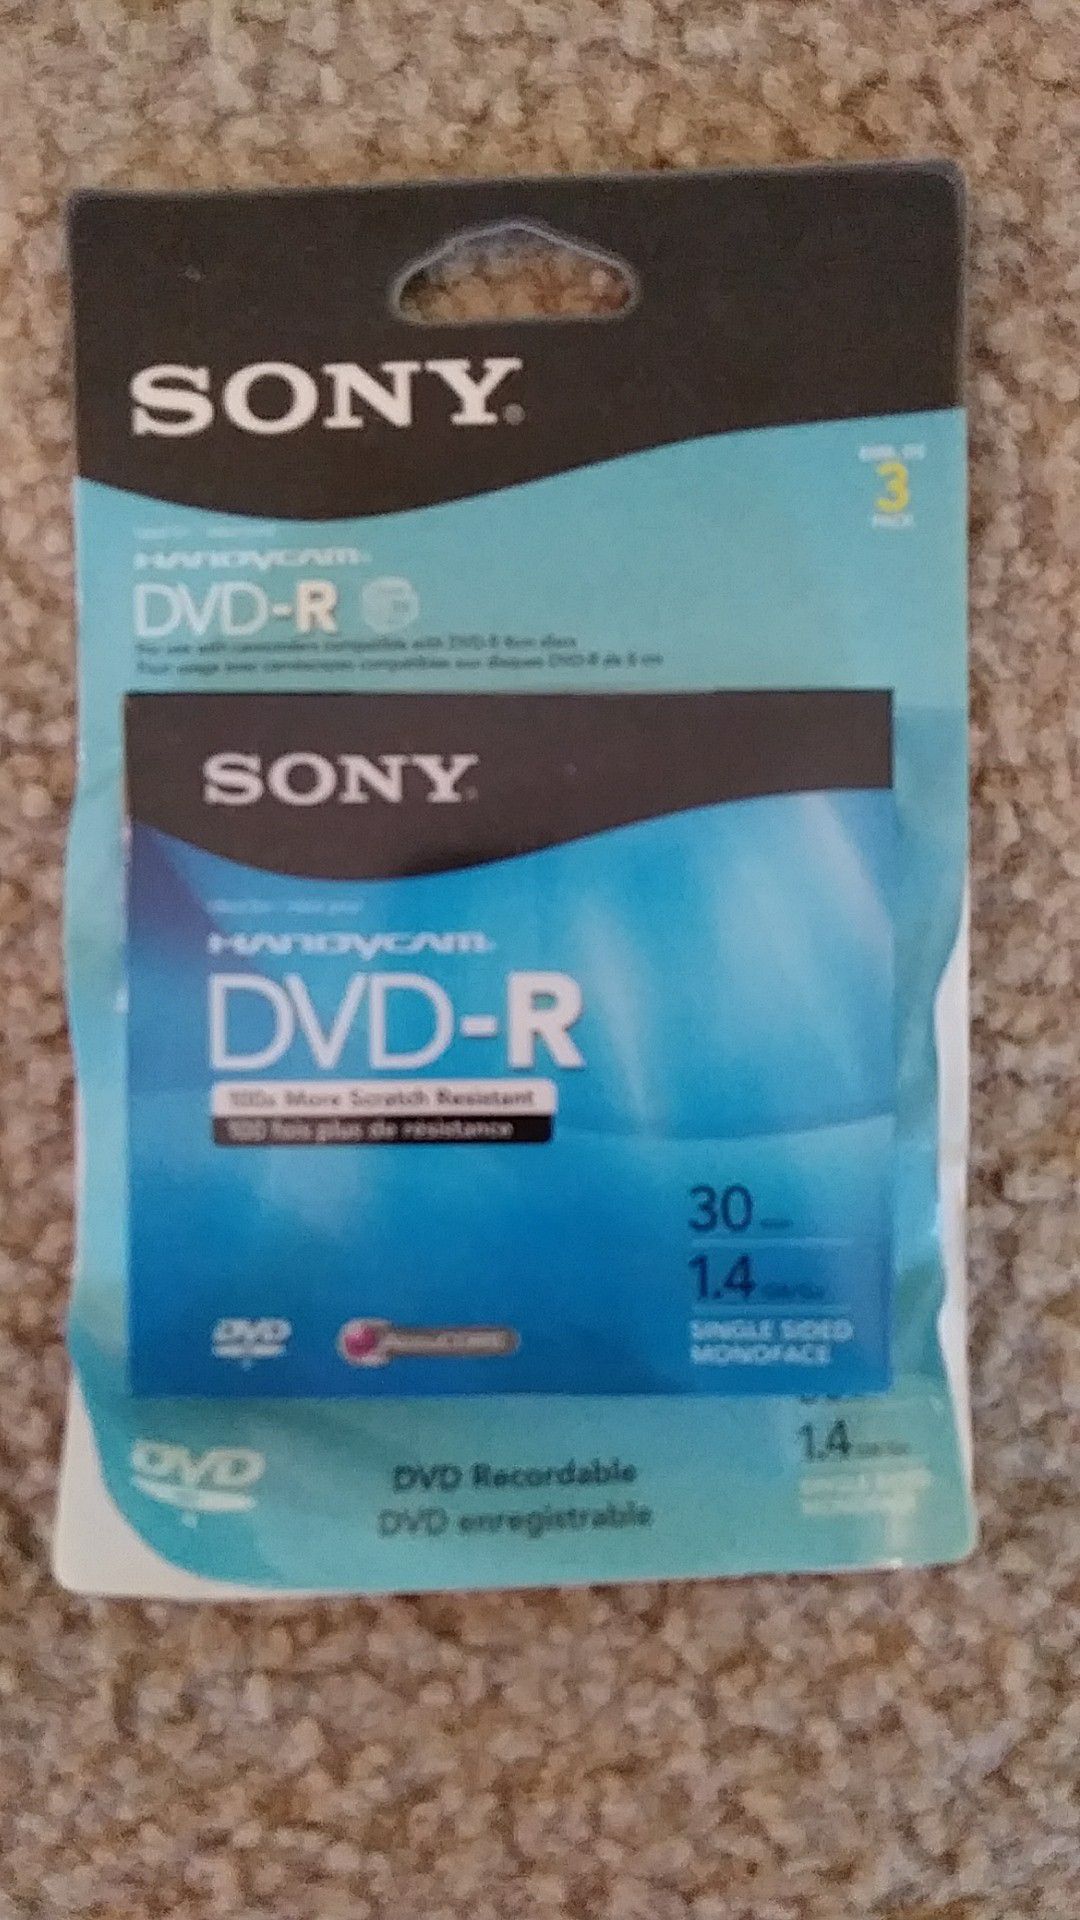 NEW Sony Handycam DVD-R 2 discs